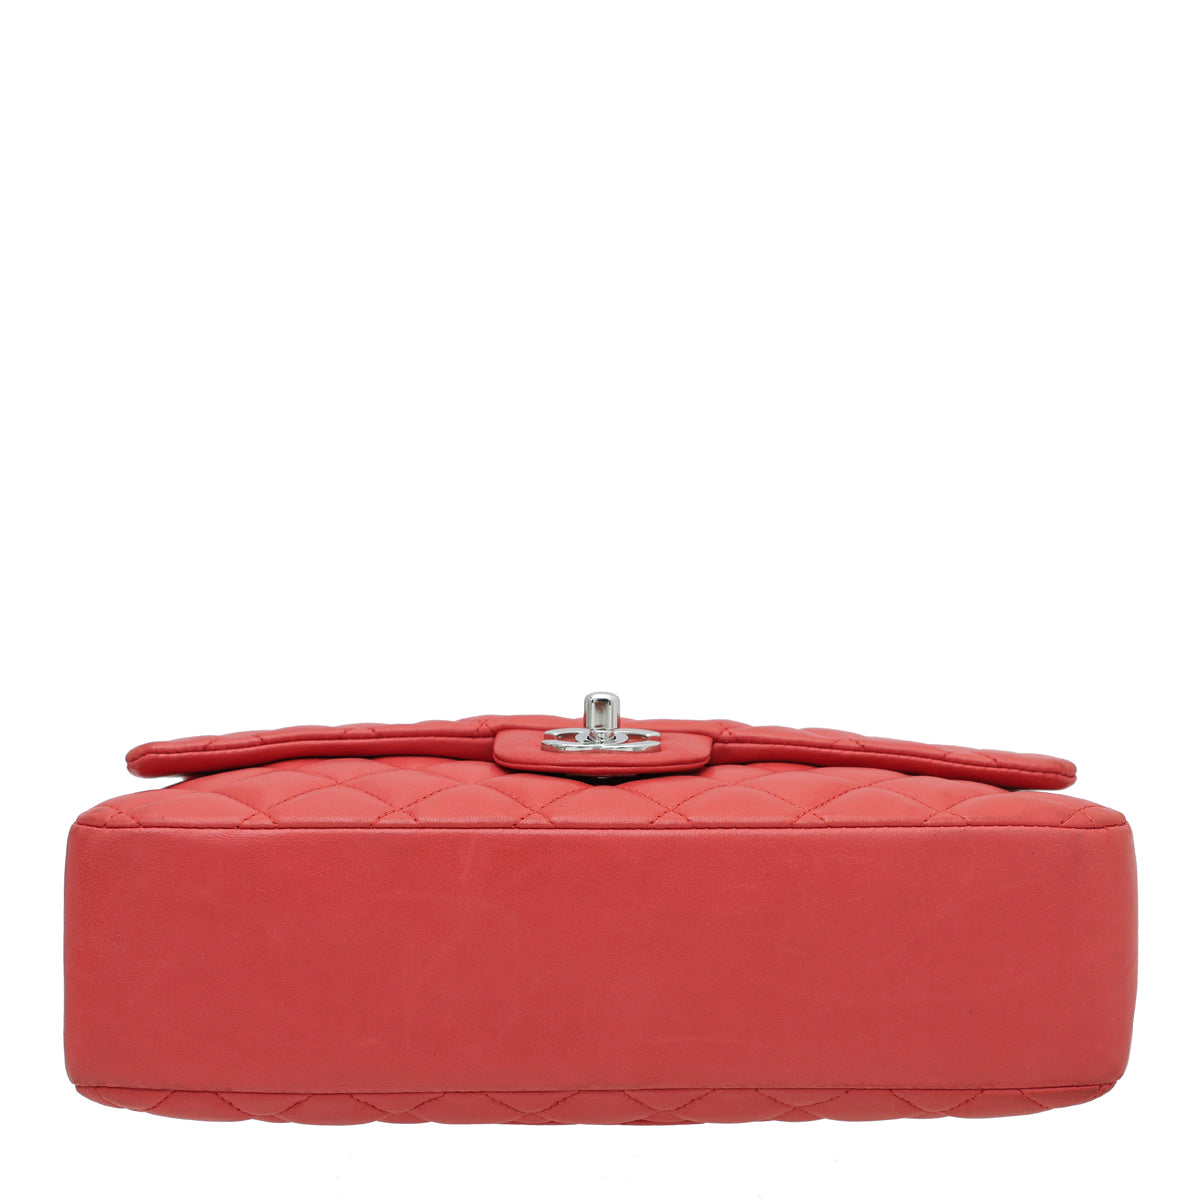 Chanel Light Red Ladybug Single Flap Medium Bag